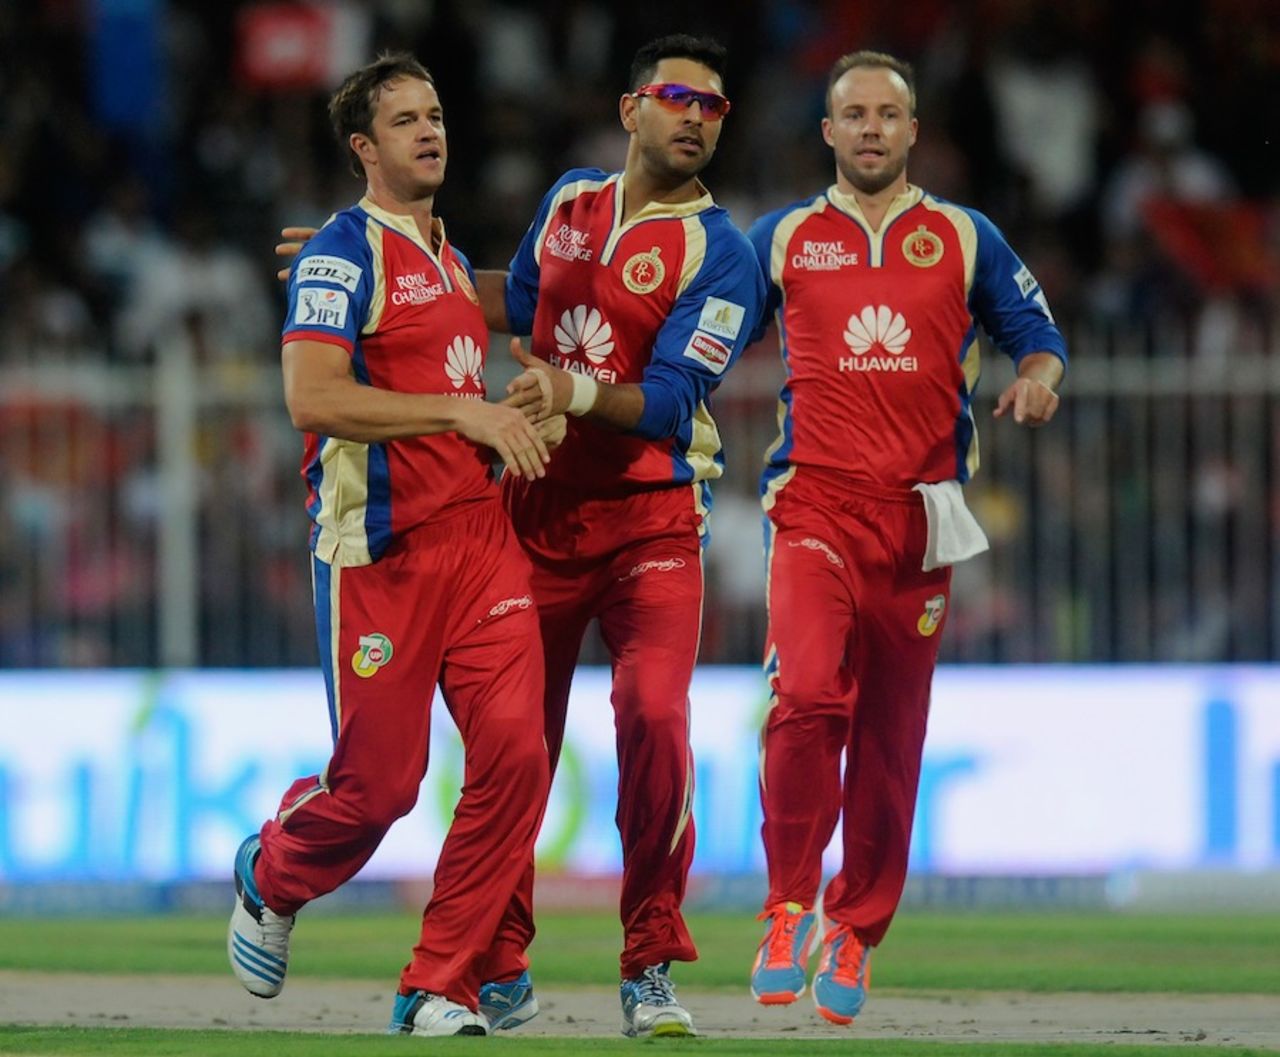 Albie Morkel, Yuvraj Singh and AB de Villiers celebrate a wicket, Royal Challengers Bangalore v Delhi Daredevils, IPL 2014, Sharjah, April 17, 2014